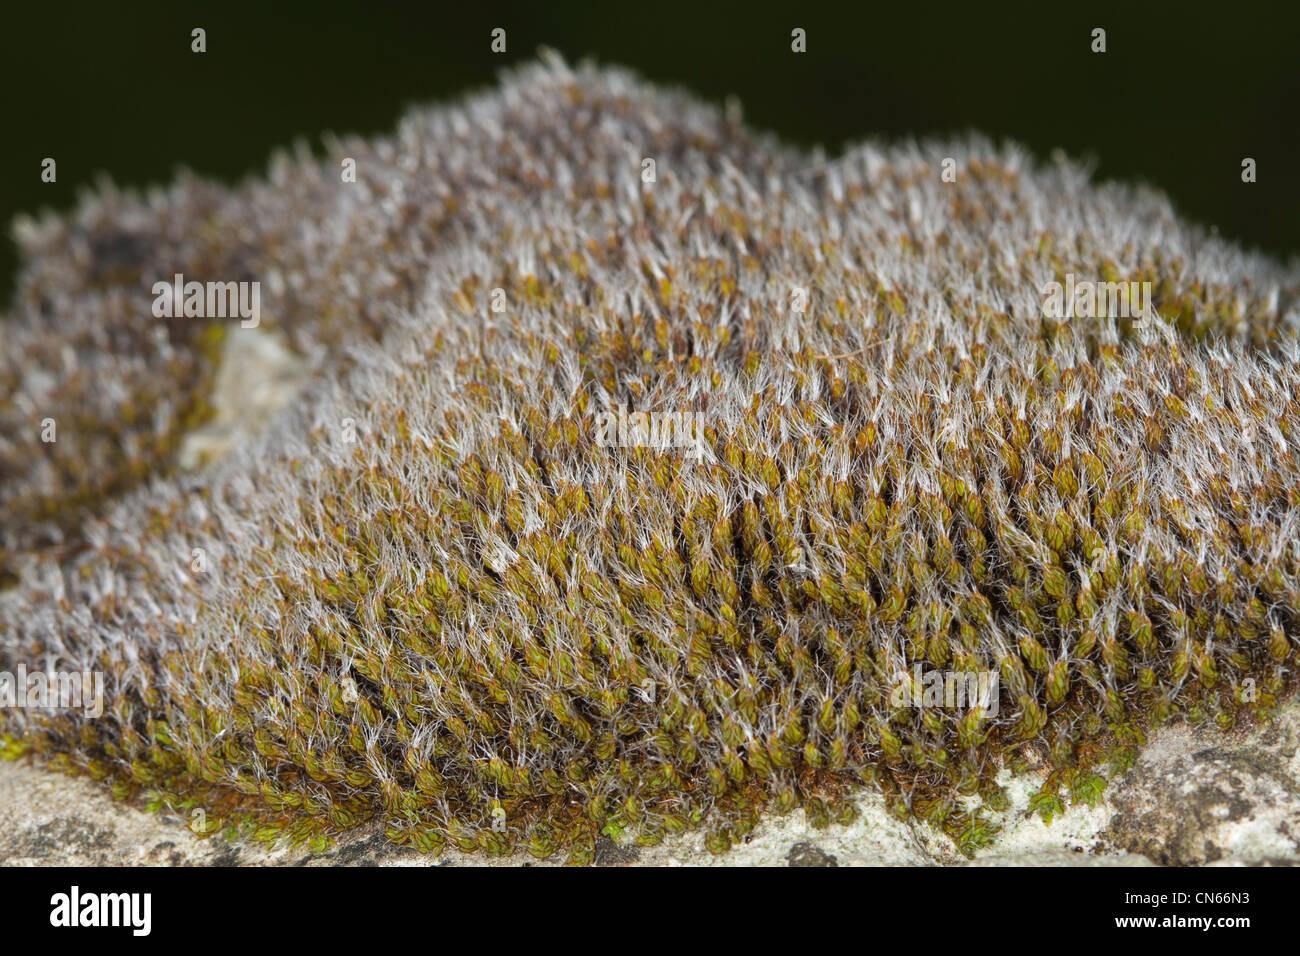 intermediate-screw-moss-syntrichia-intermedia-growing-on-a-dry-stone-CN66N3.jpg